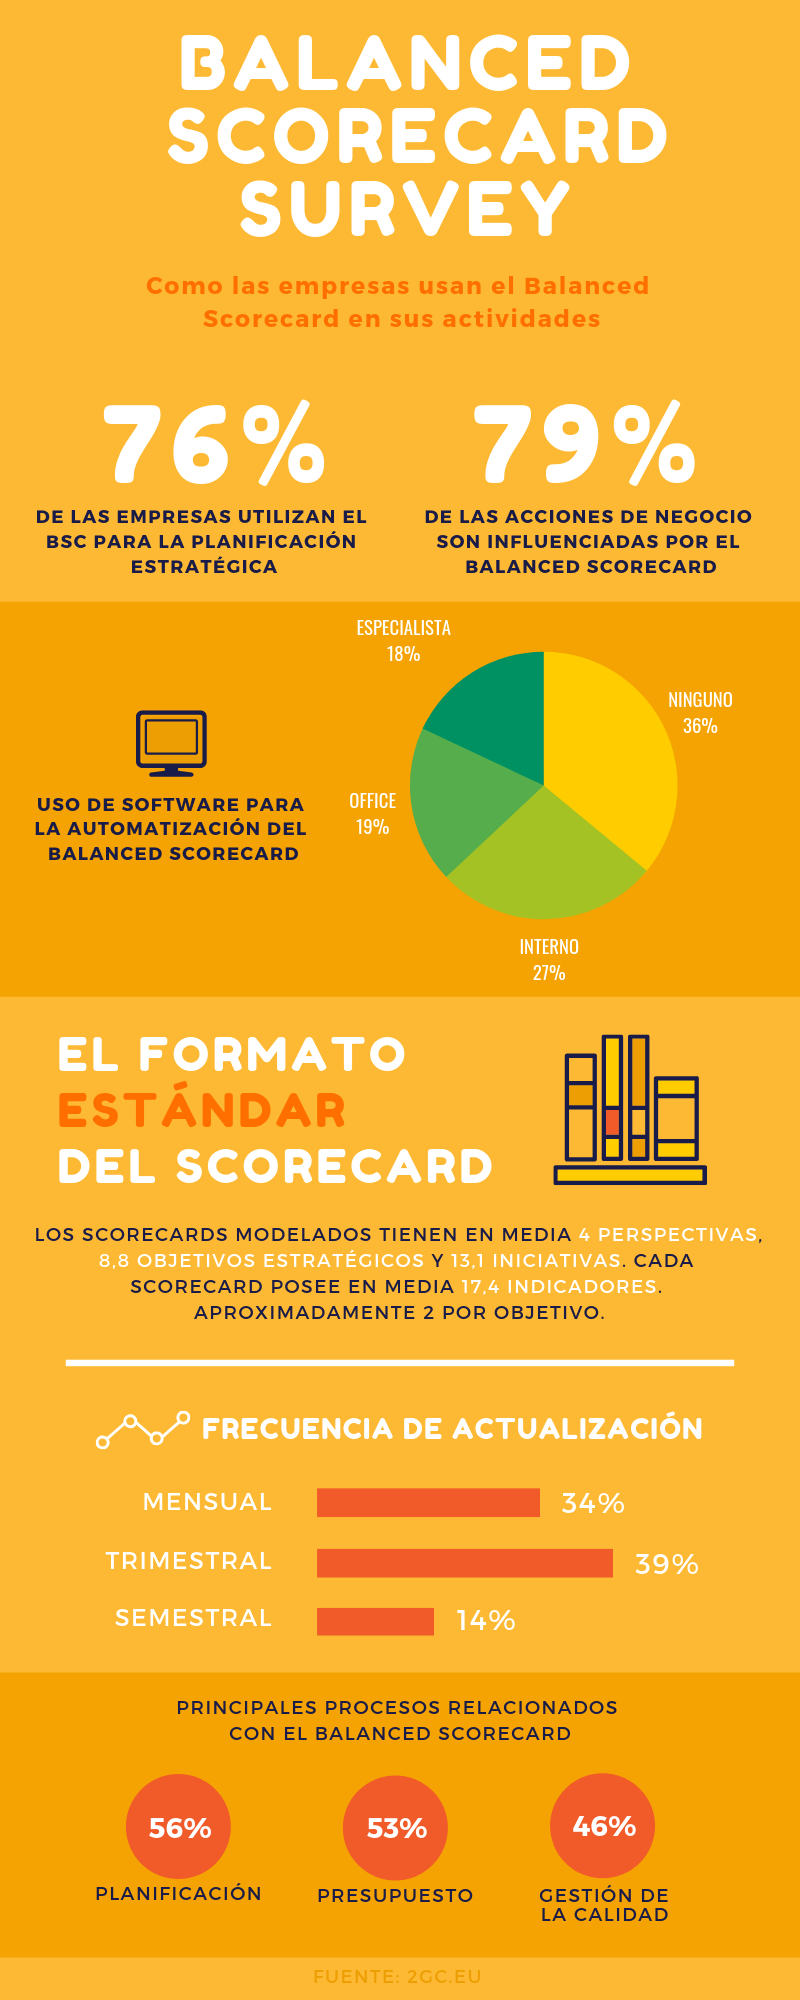 Balanced scorecard survey - español